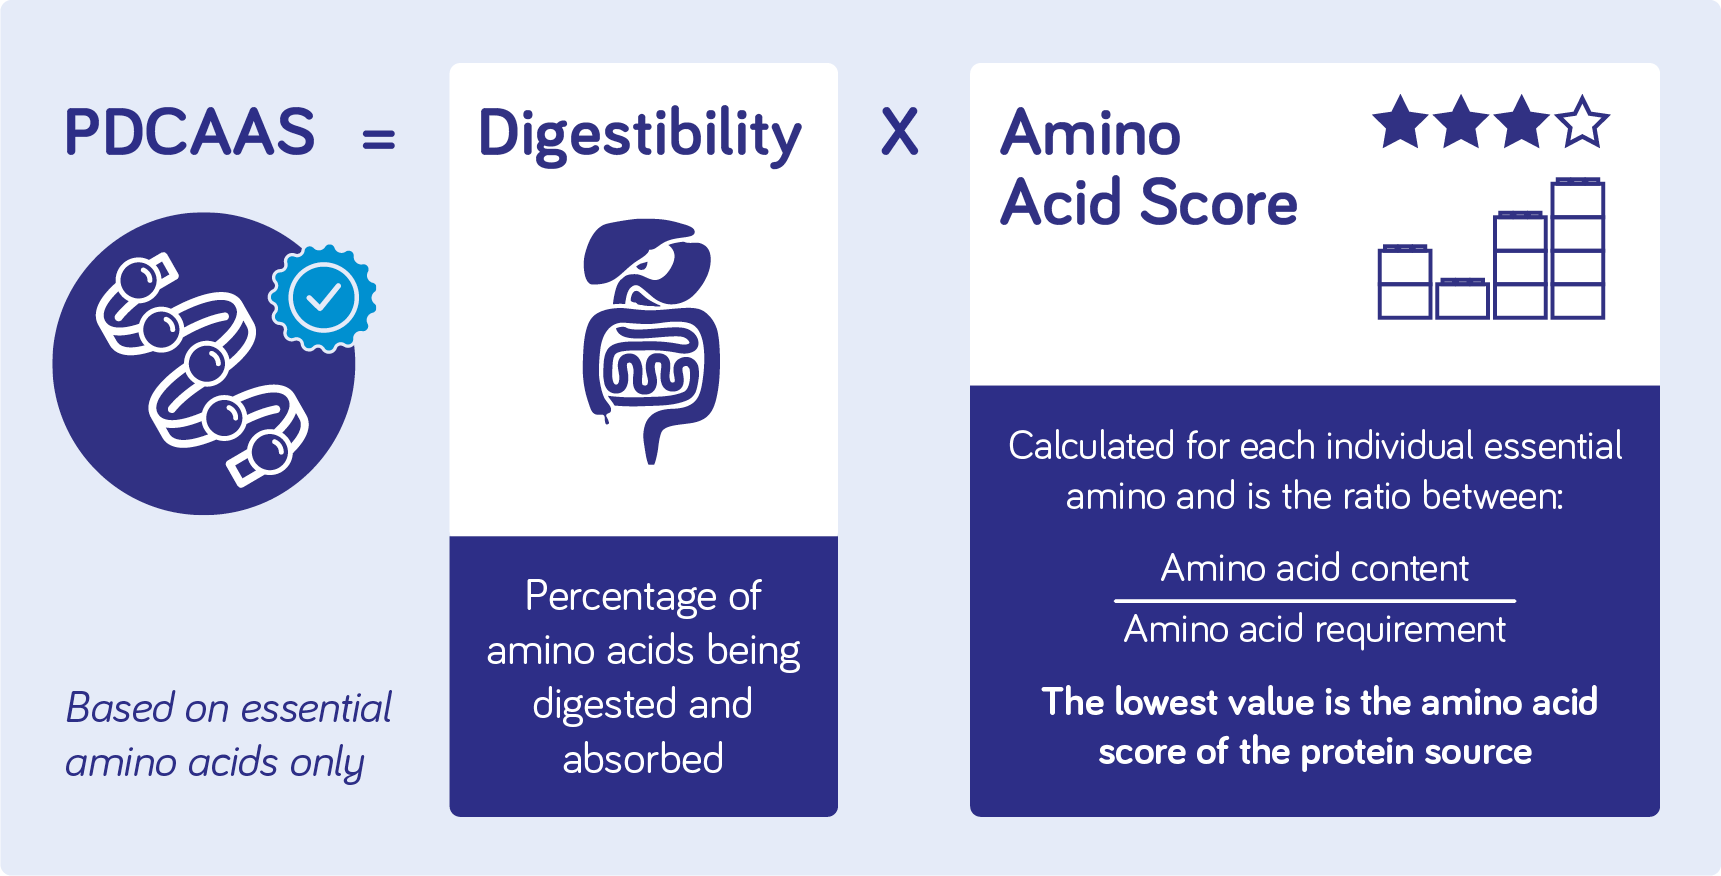 PDCAAS = Digestibilty * Amino Acid Score